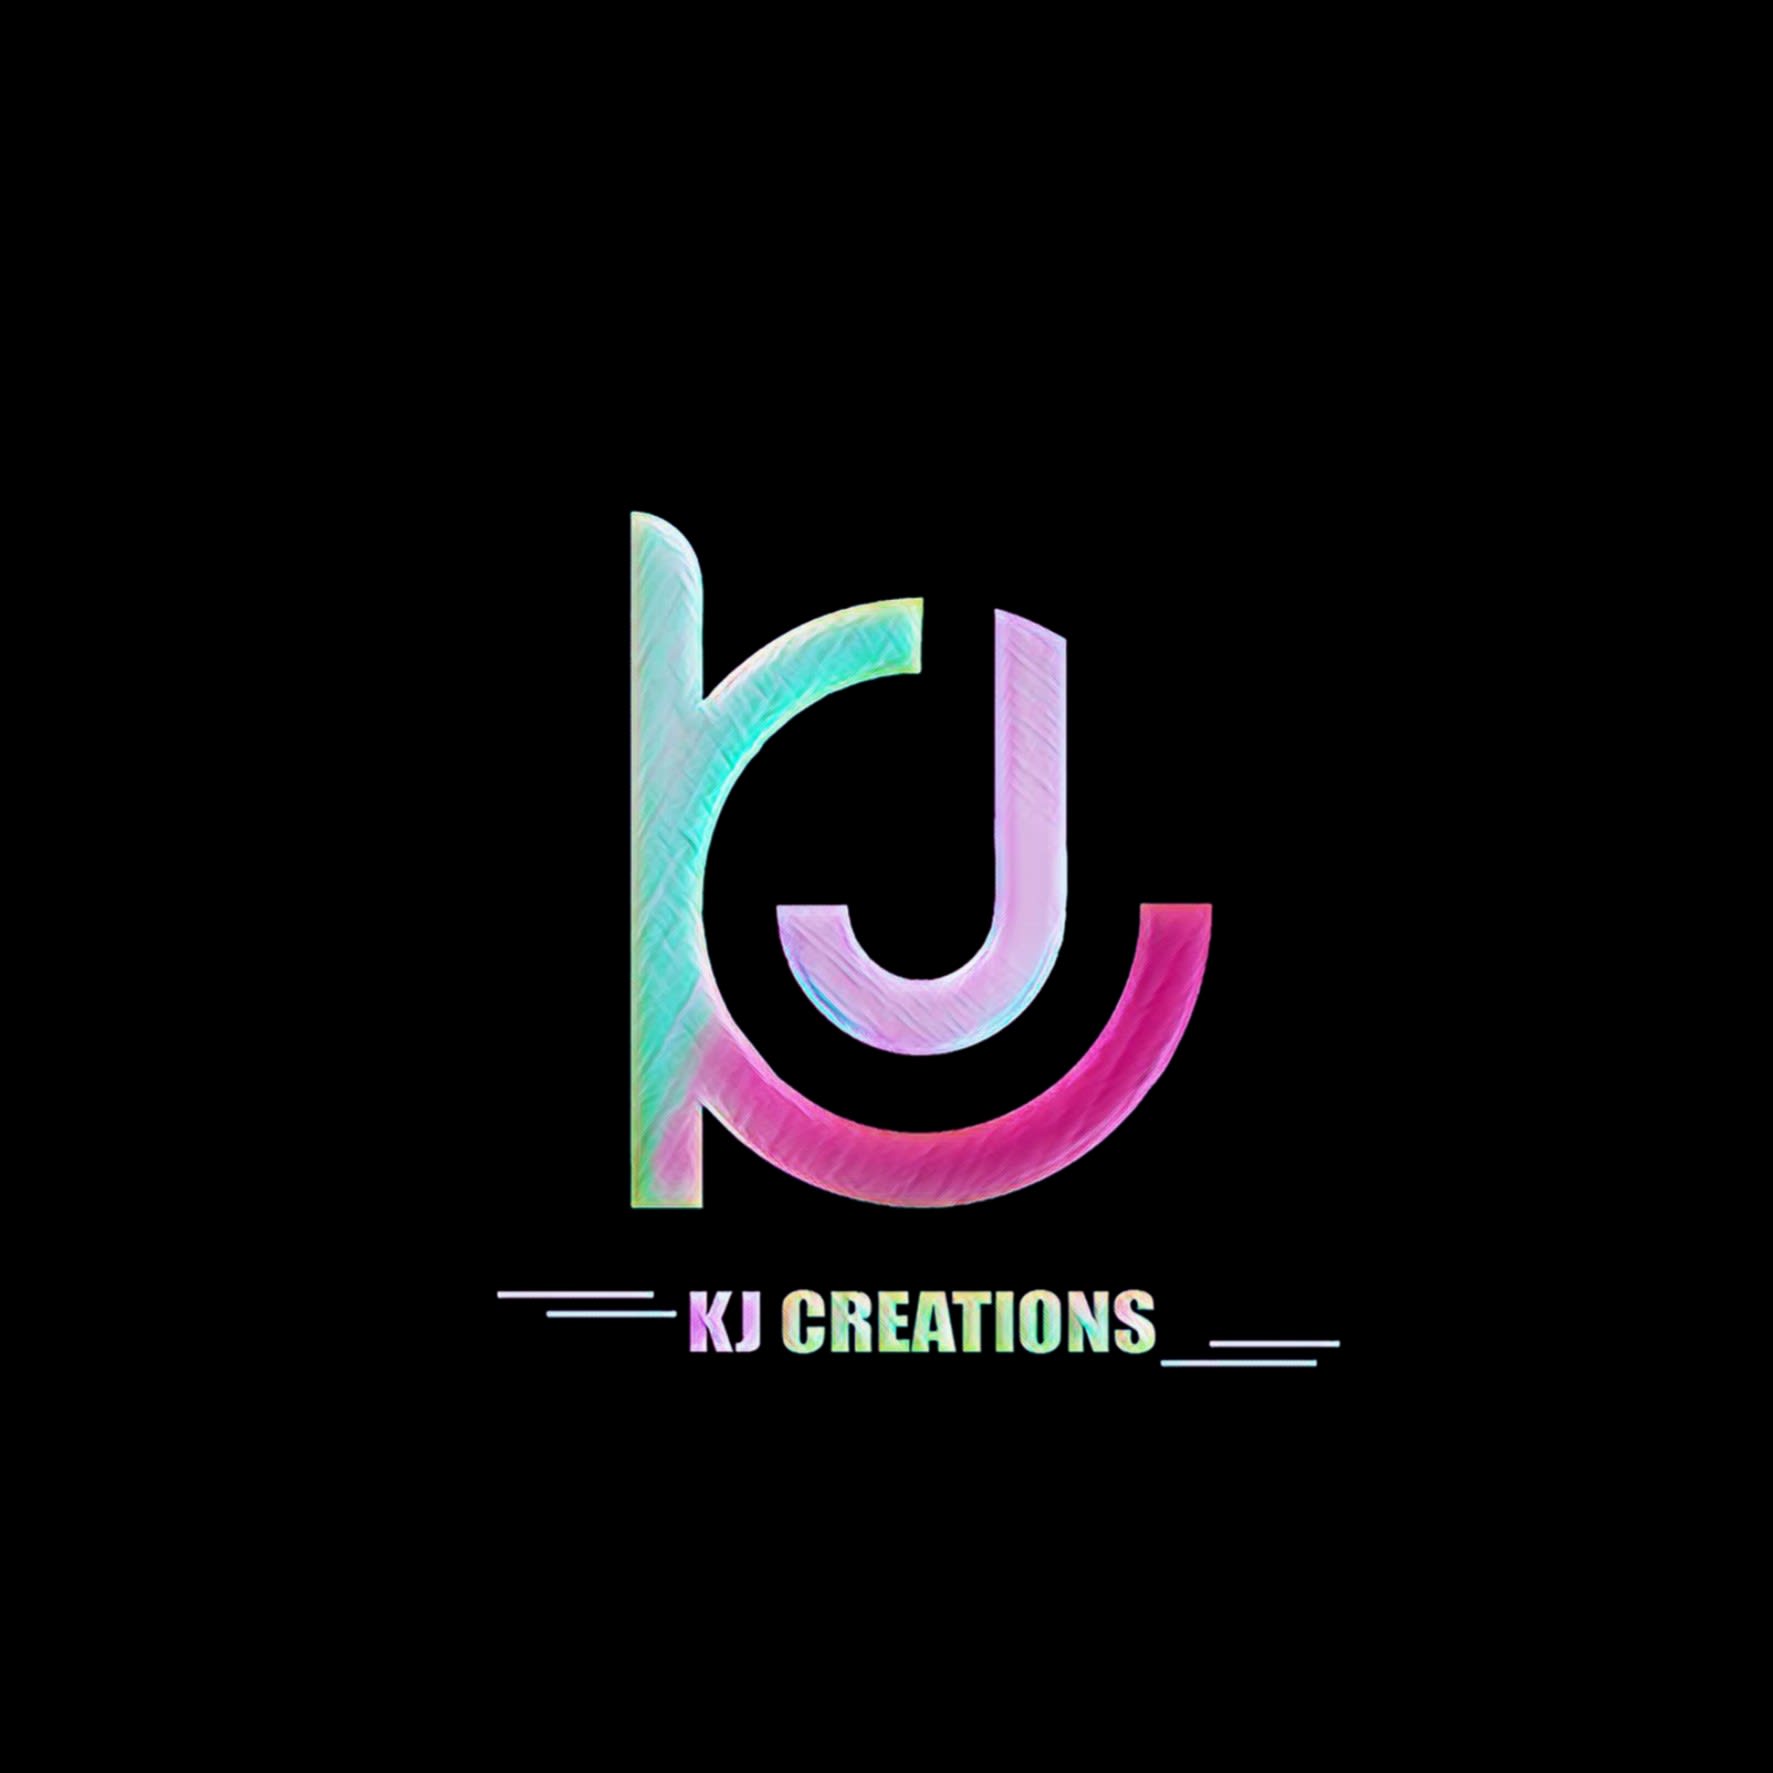 KJ Creations